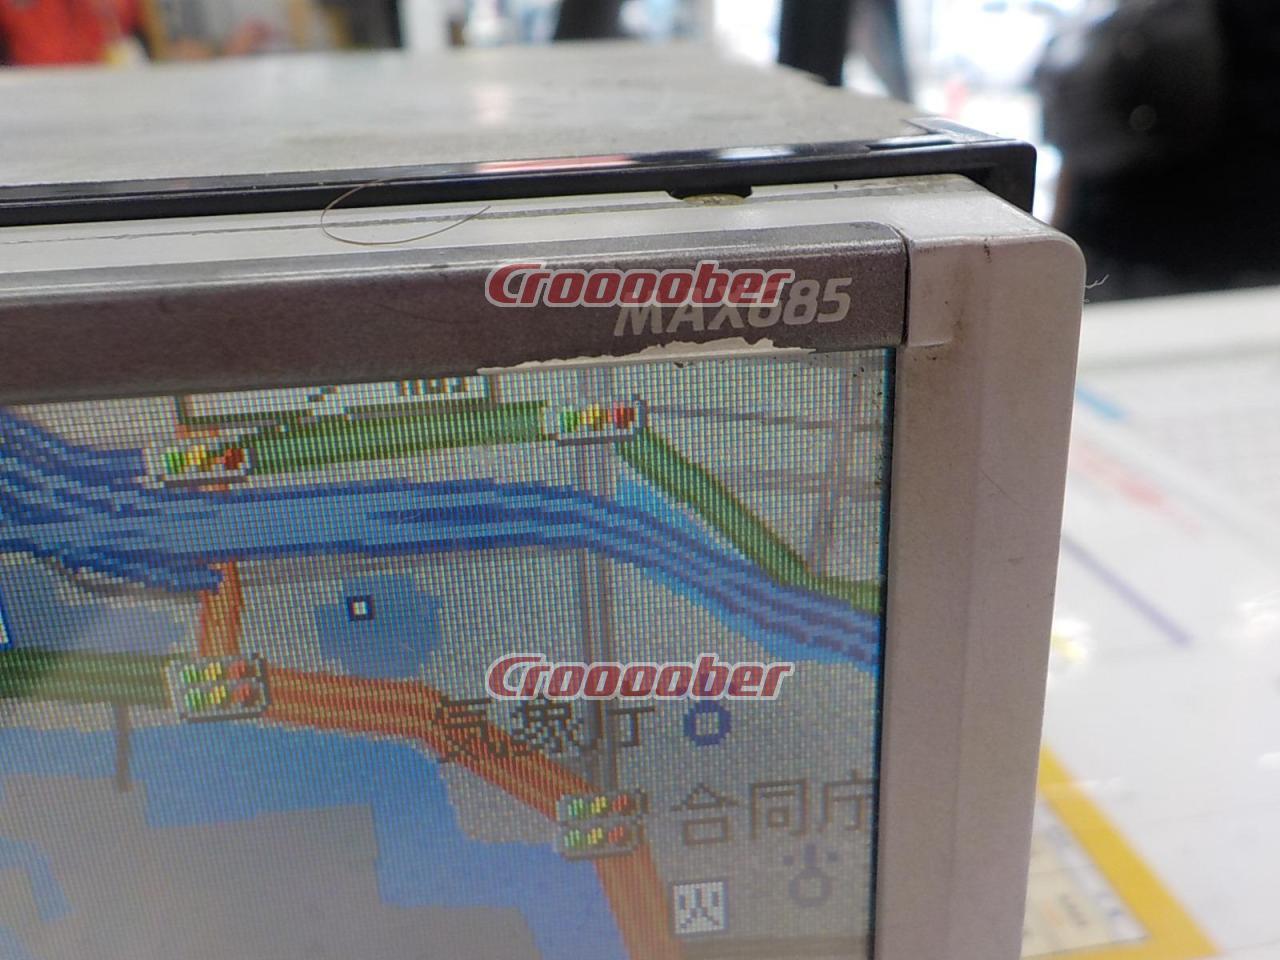 Clarion MAX685 | HDD Navigation(digital) | Croooober